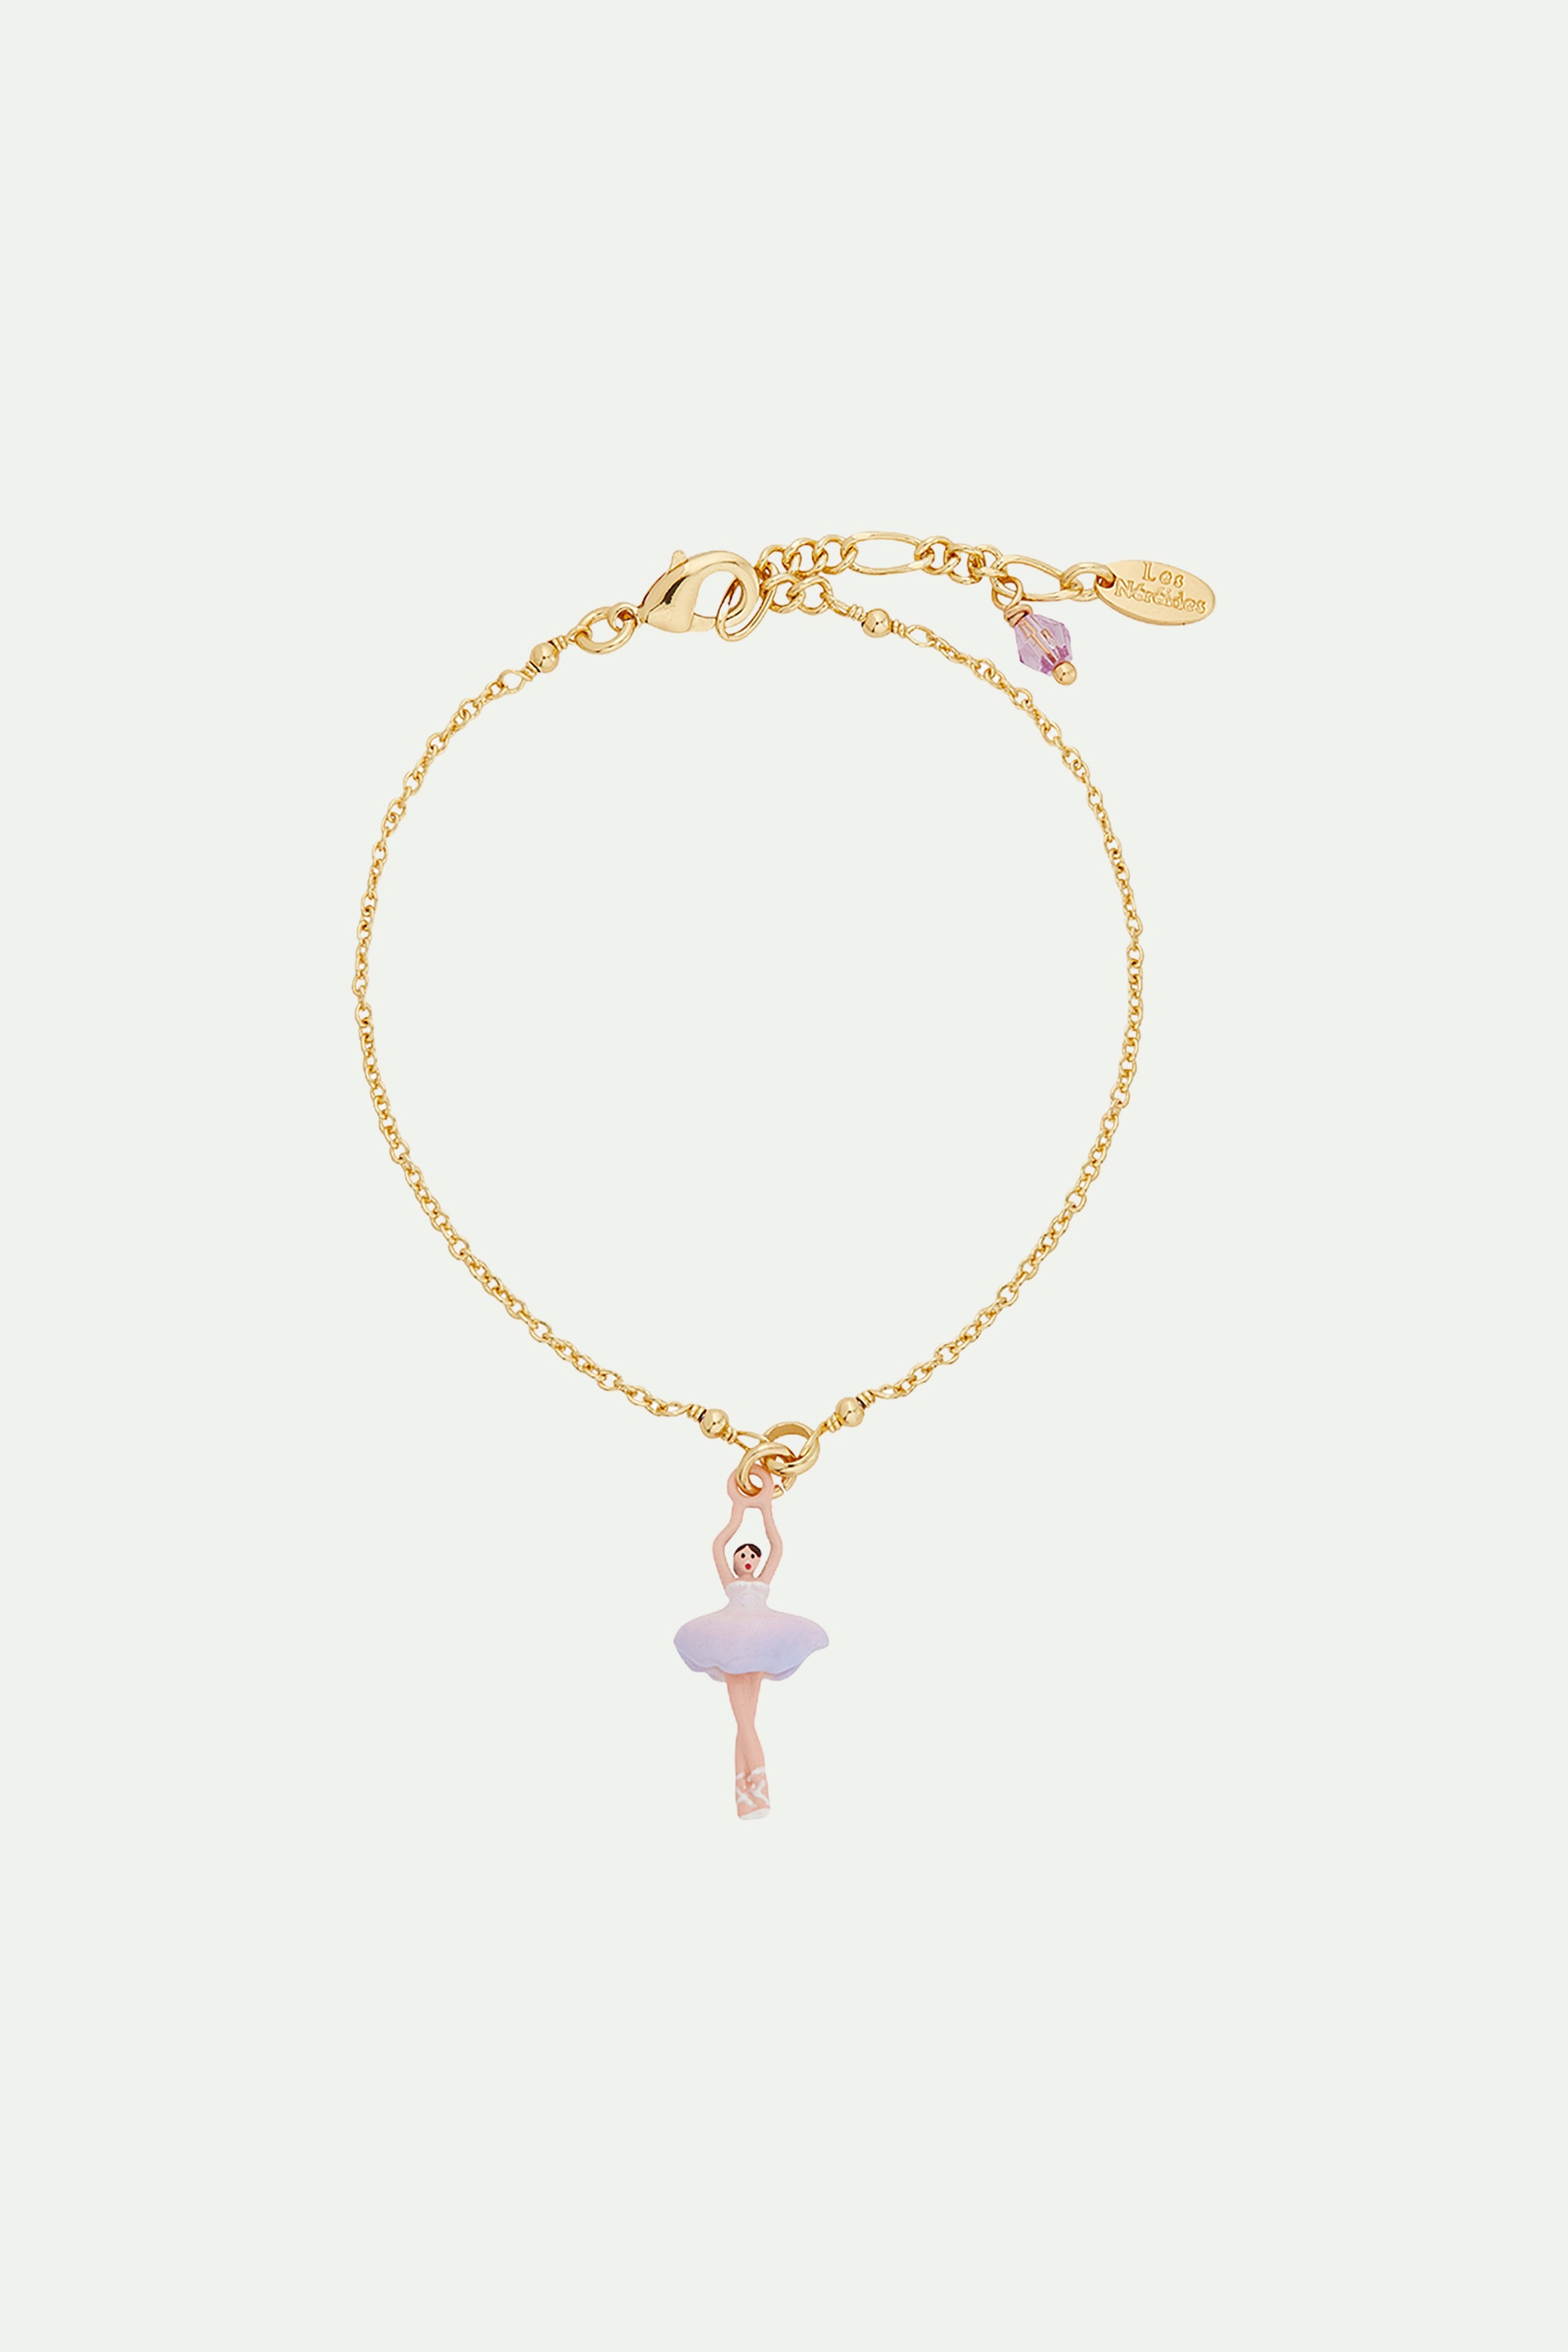 Lilac and white mini ballerina fine bracelet